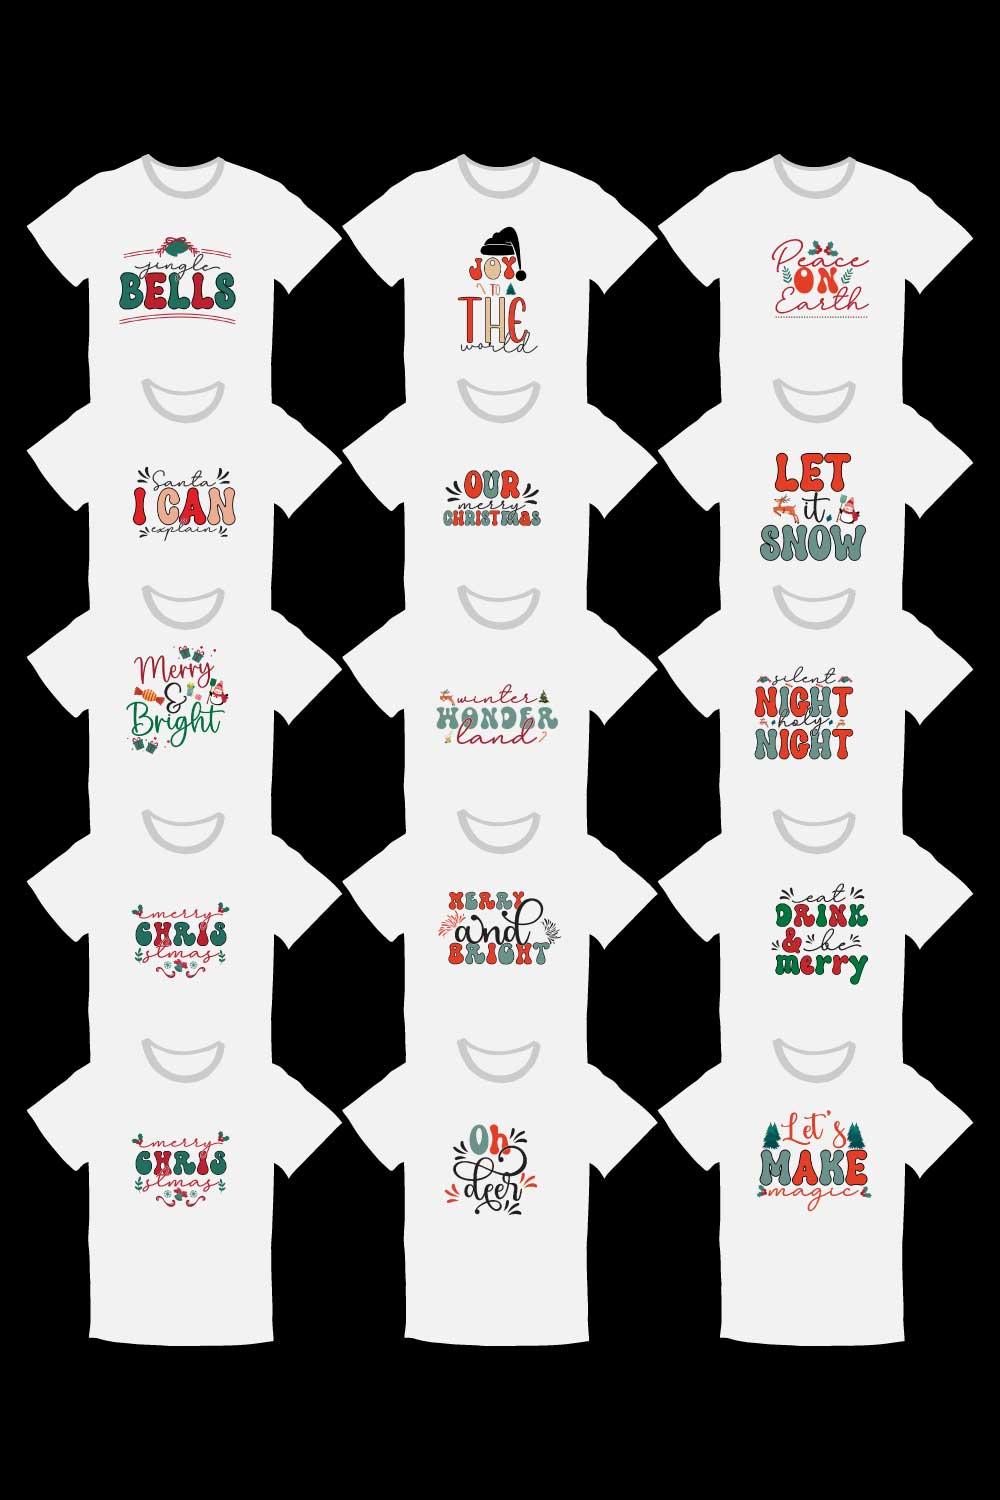 Merry Christmas T-shirt Designs Graphic pinterest image.